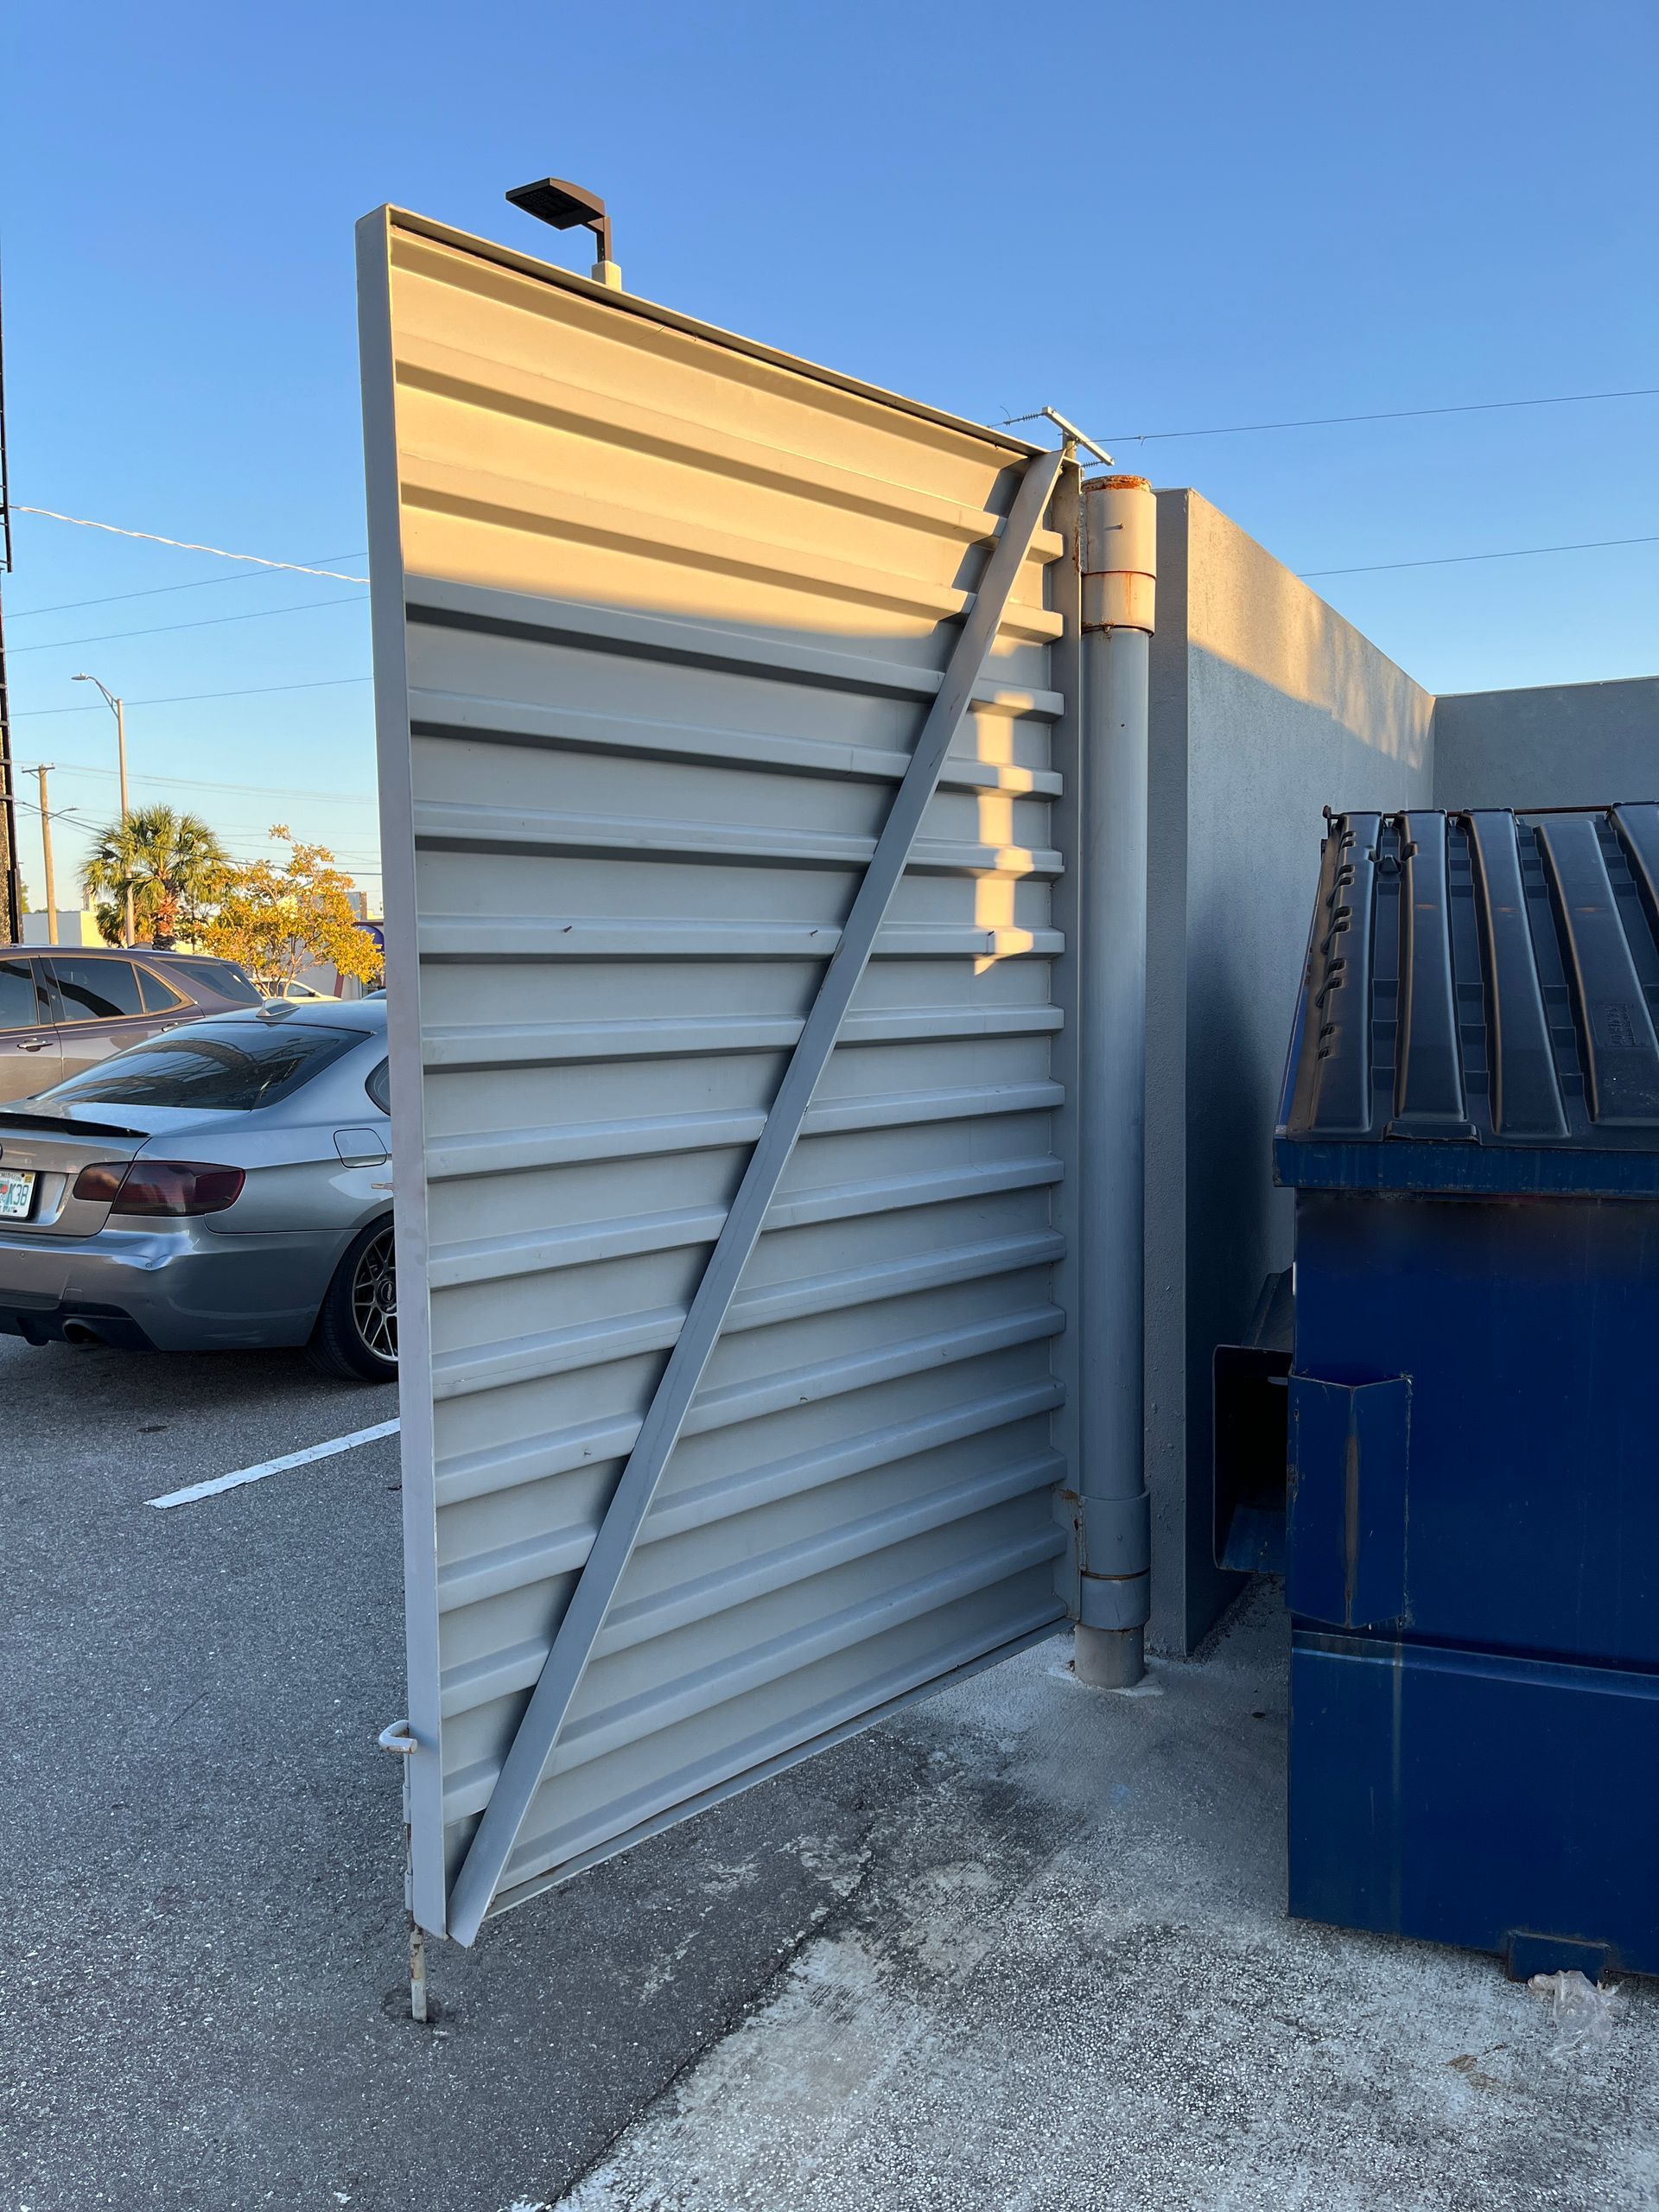 double door dumpster gate in Tampa parking lot on metal hinges